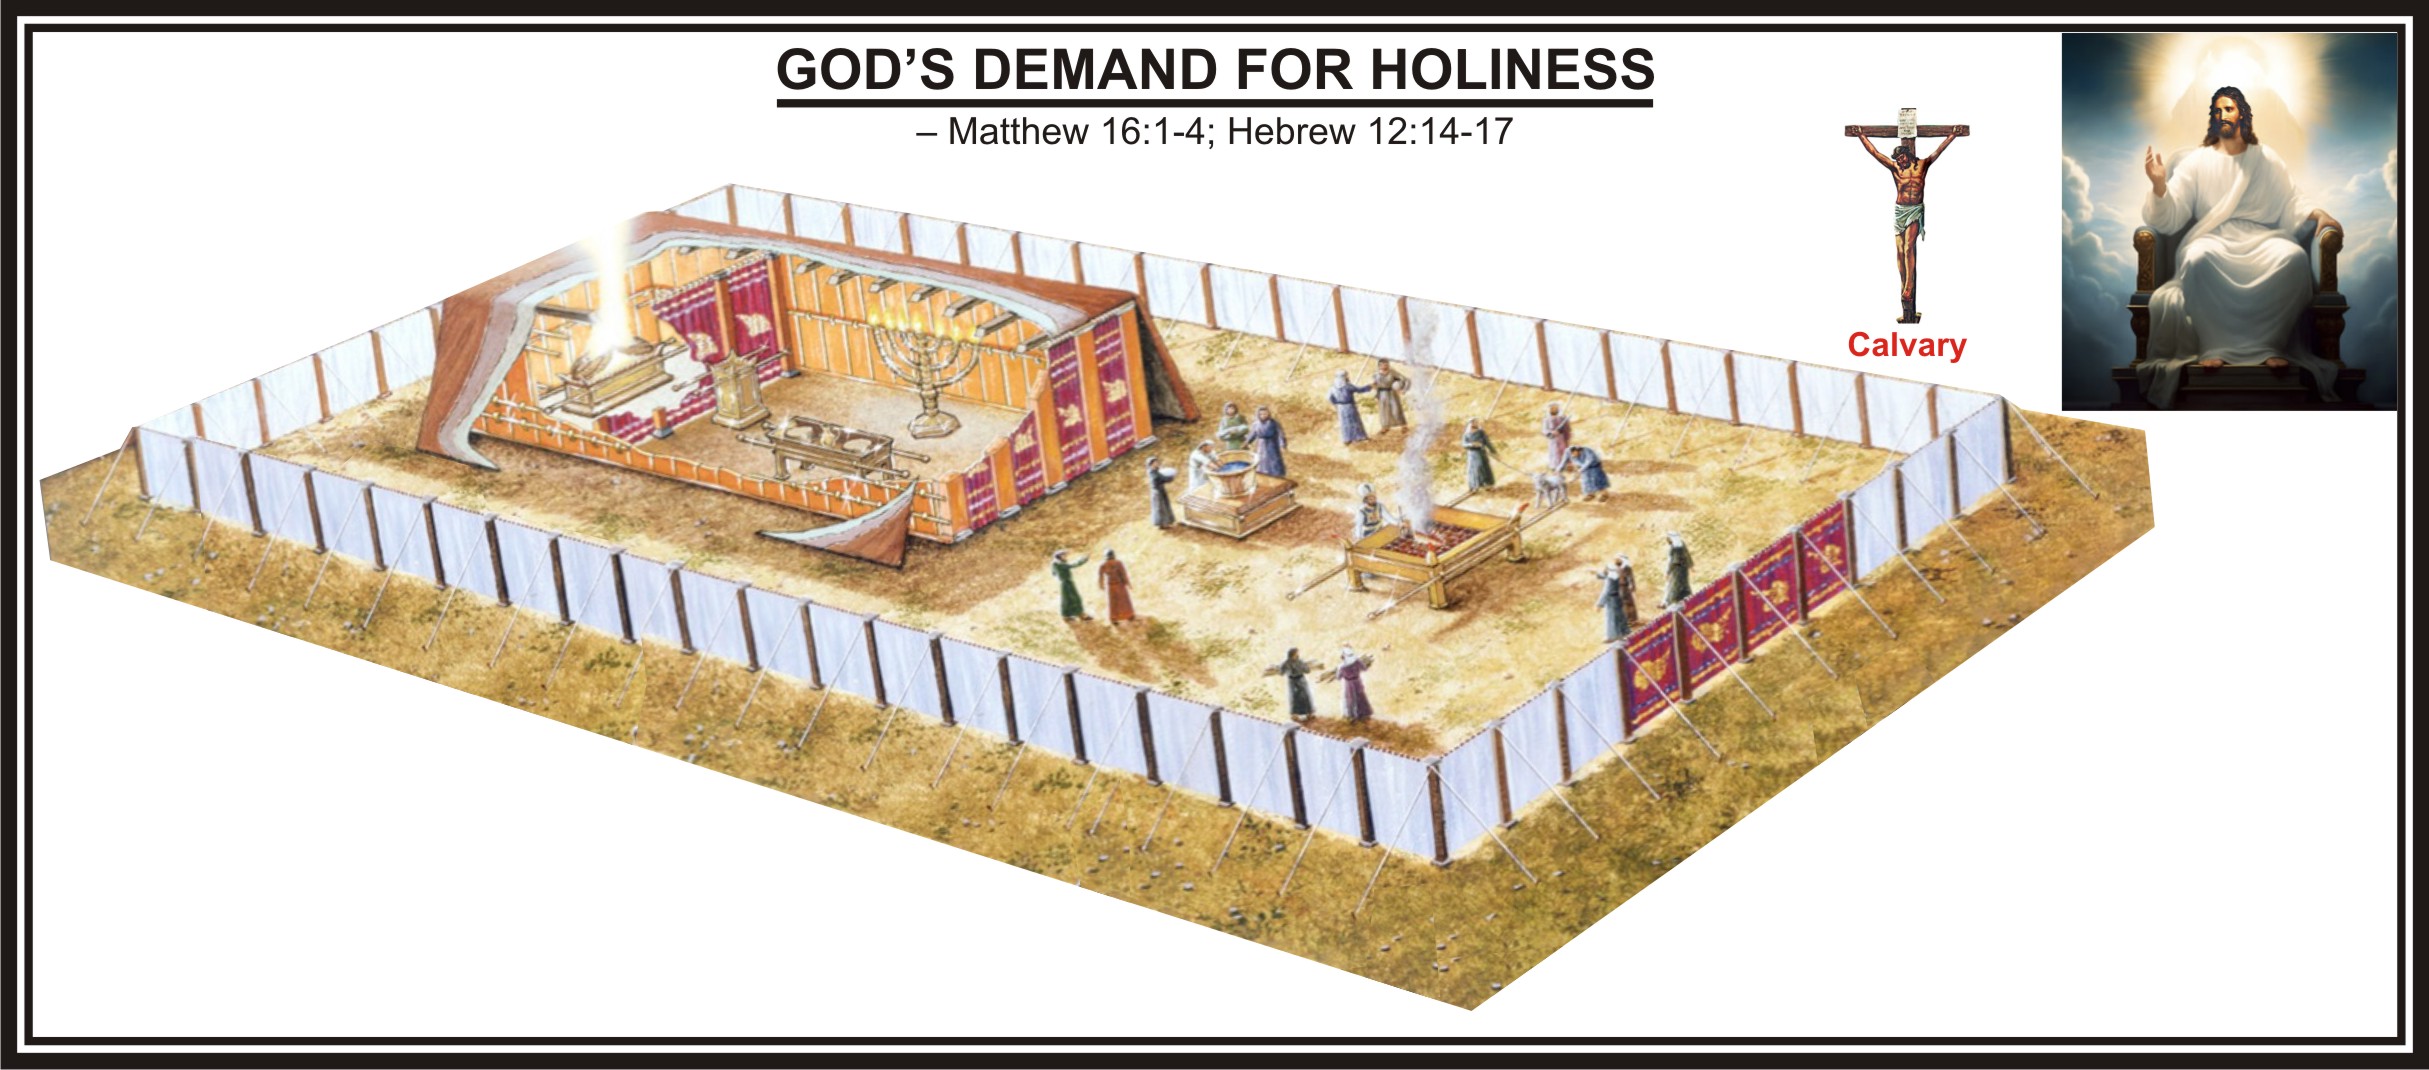 GOD'S DEMAND FOR HOLINESS